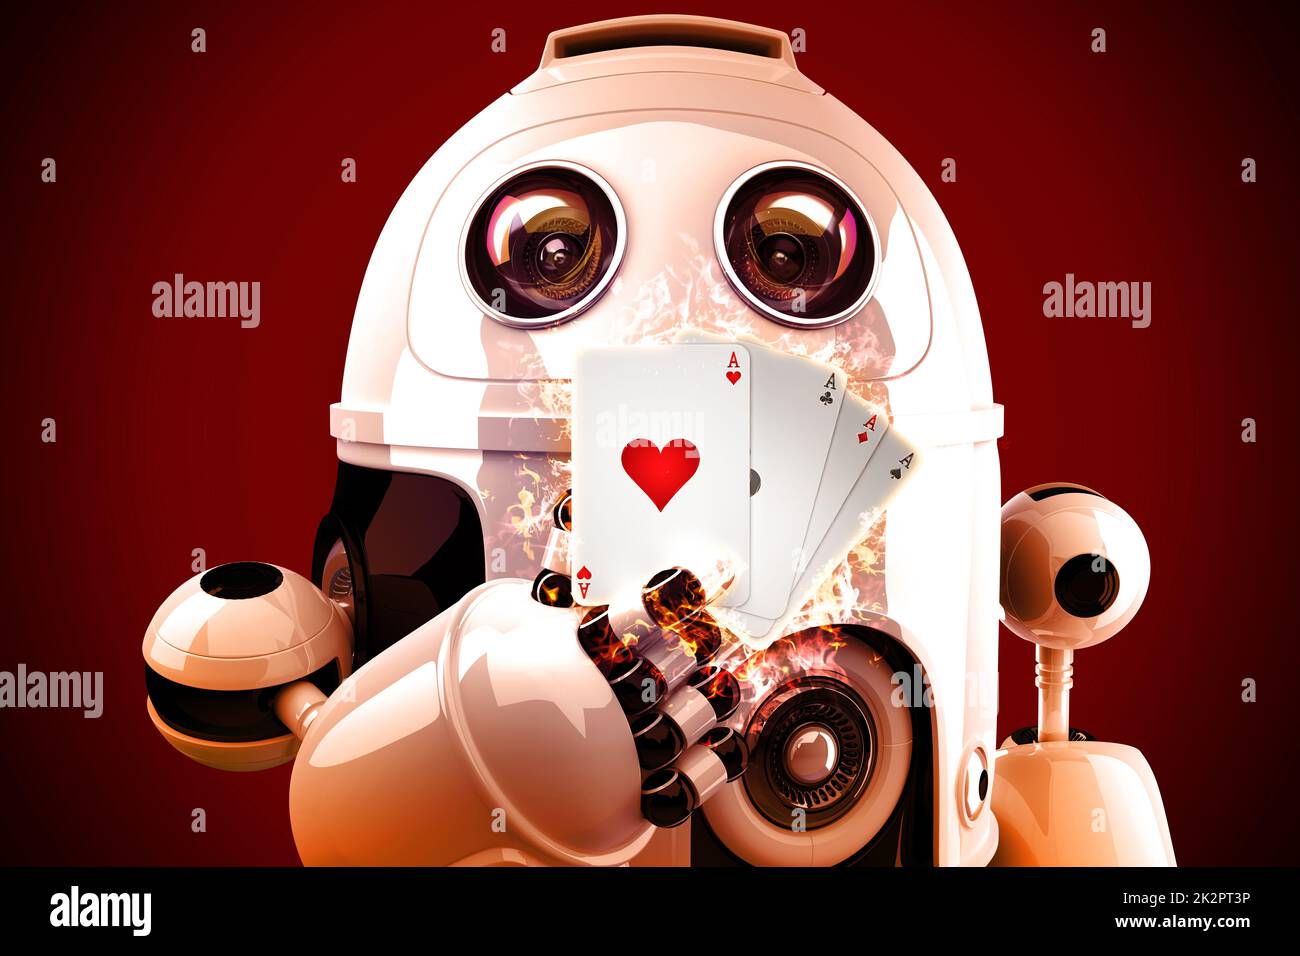 Robot playing poker. 3D illustration Stock Photo